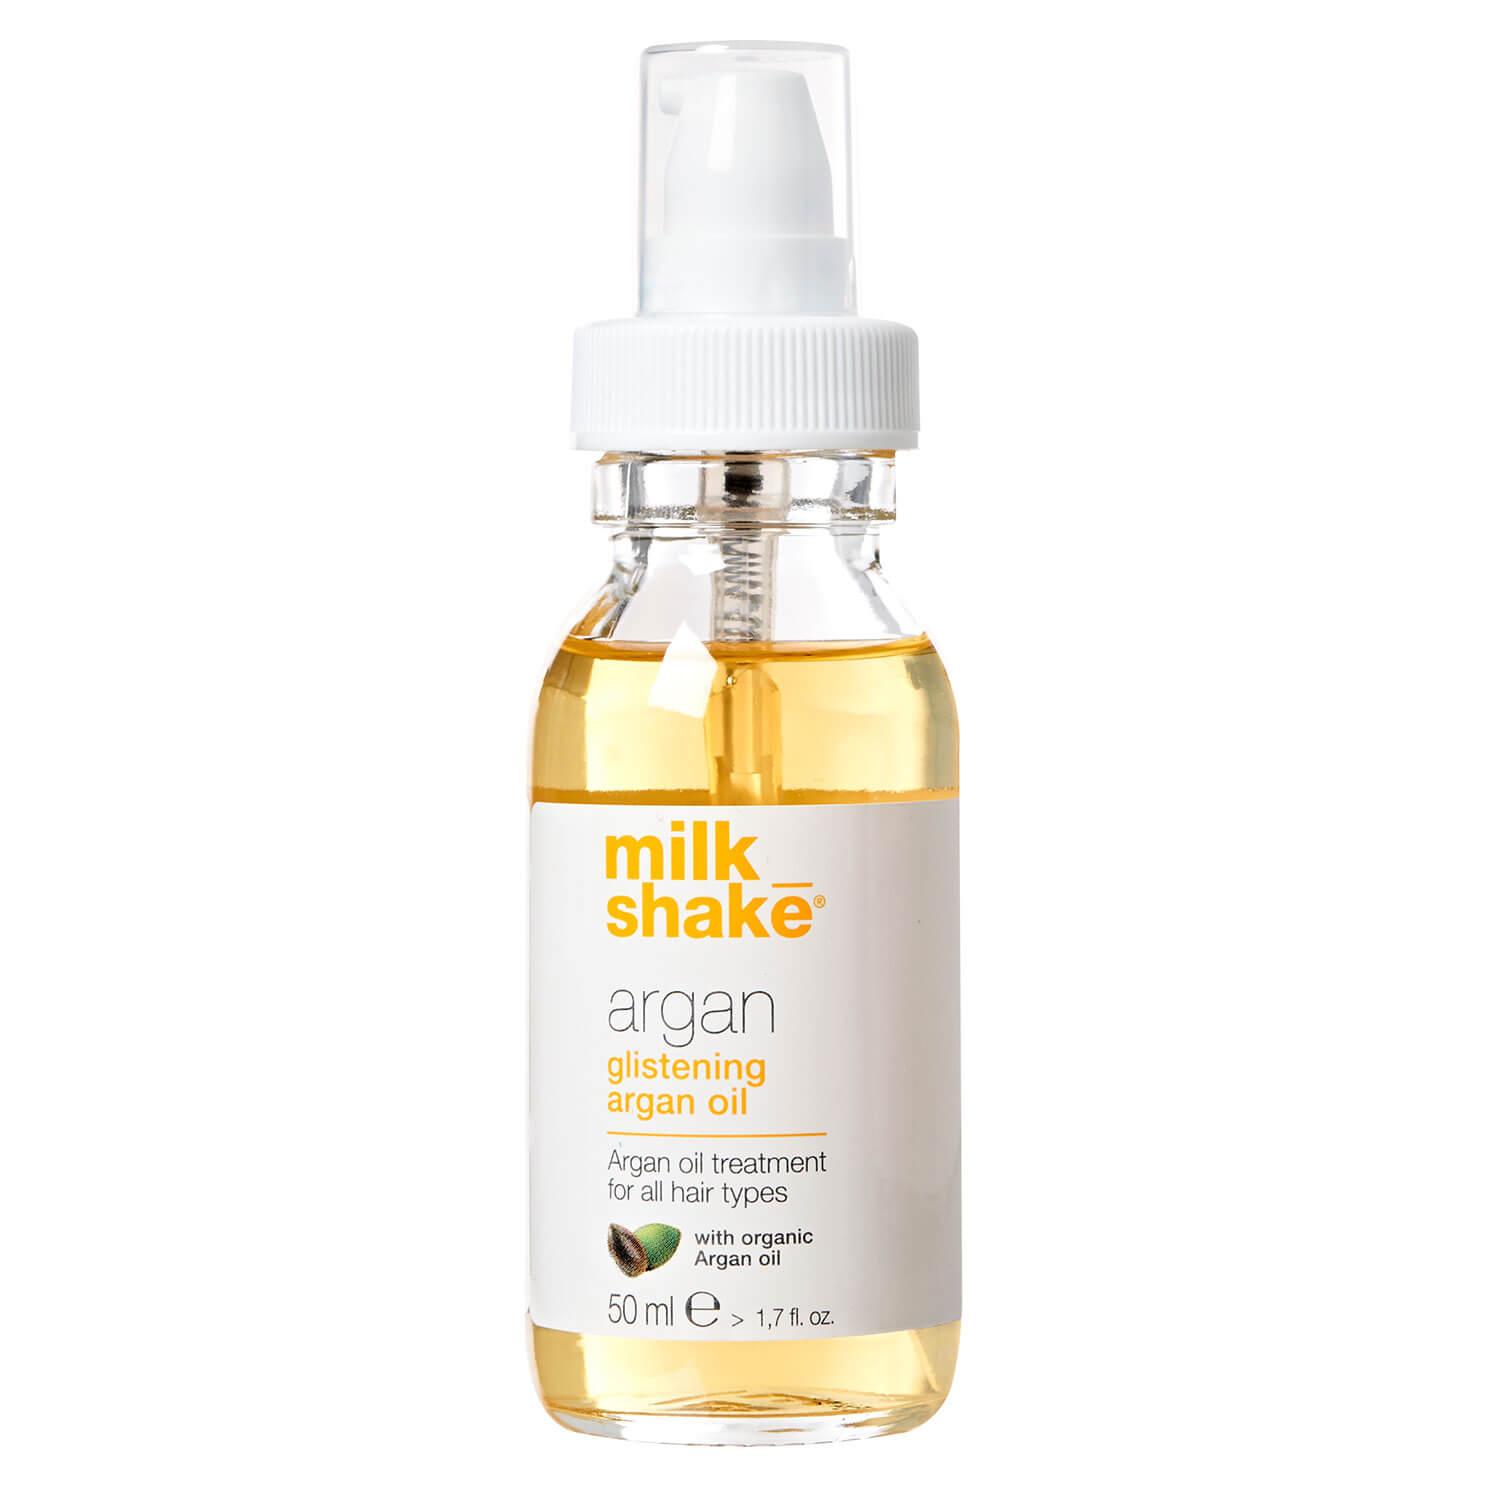 milk_shake argan - glistening argan oil